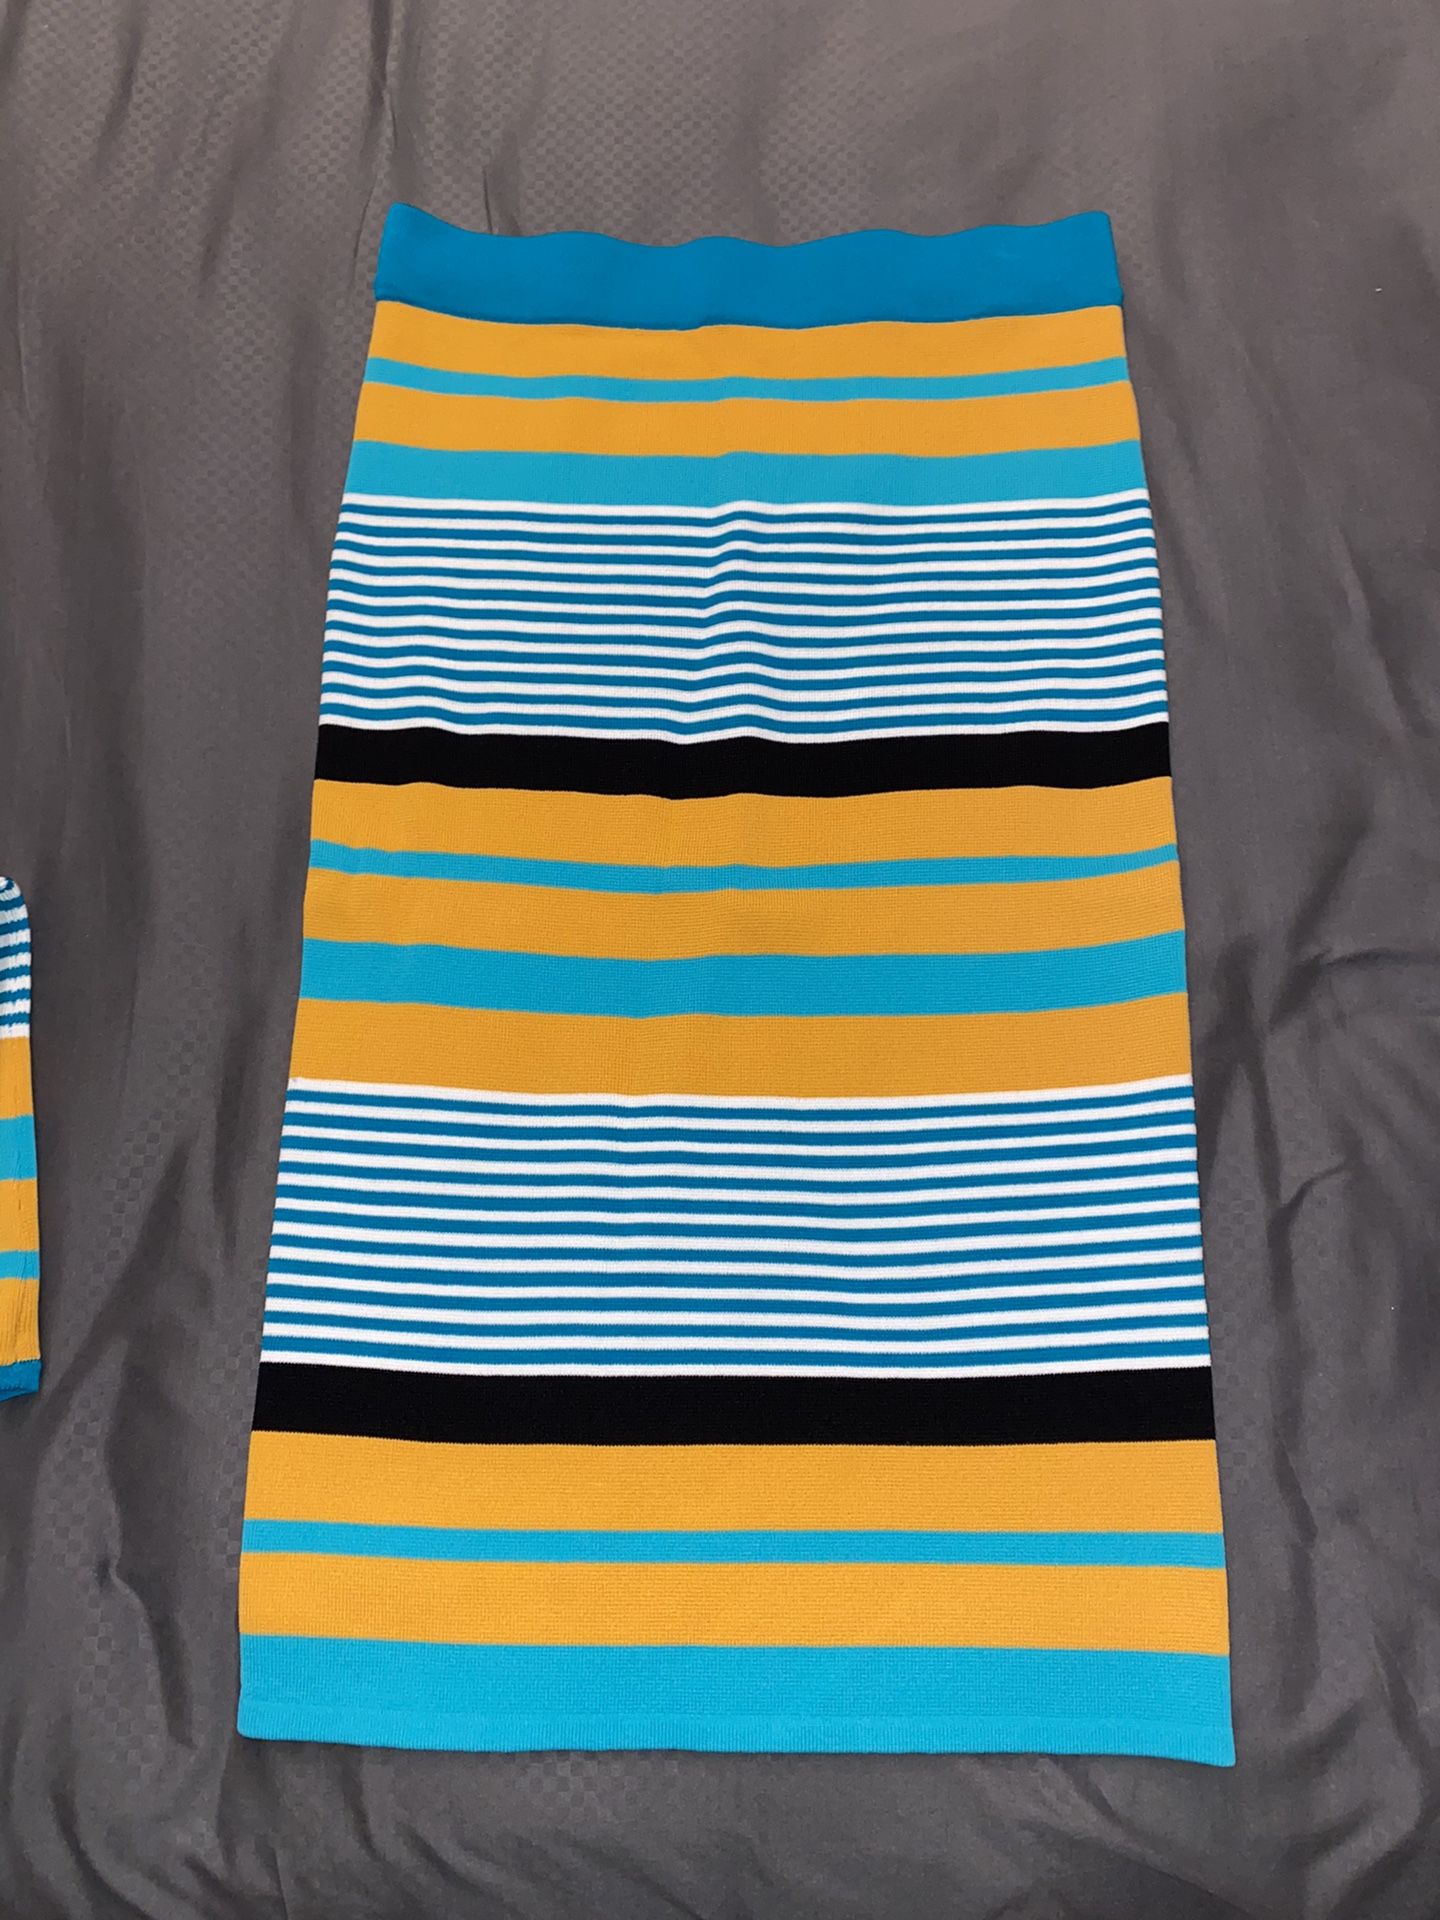 New York & Company striped skirt